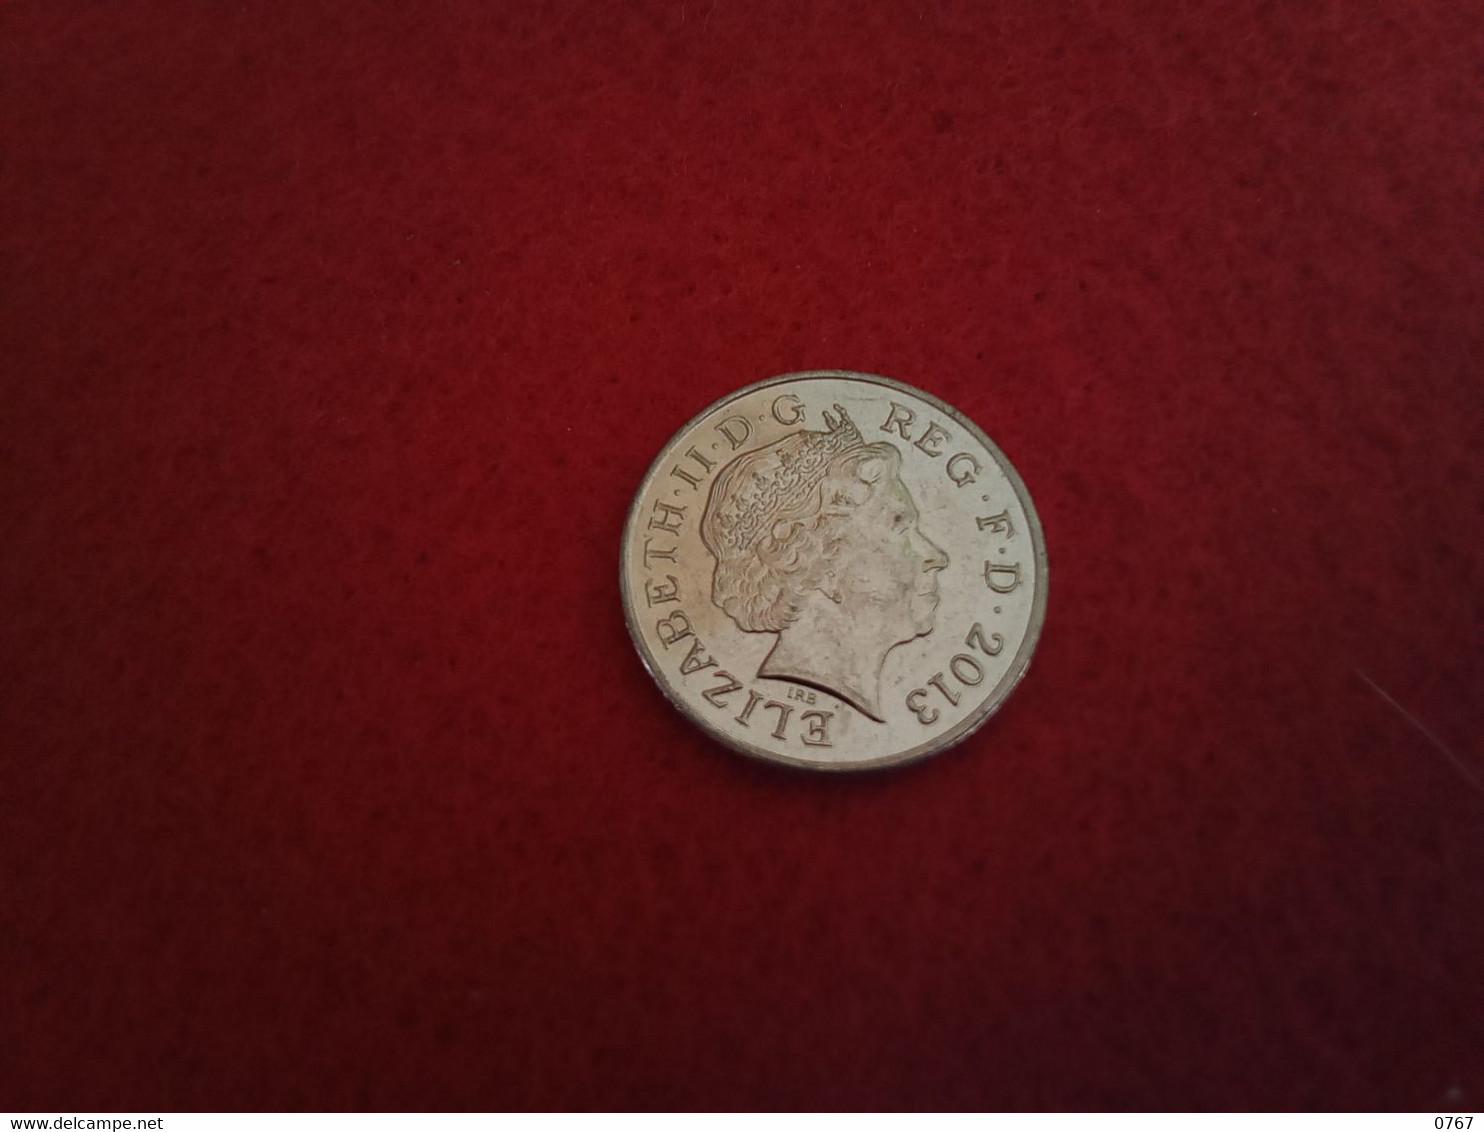 Monnaie ANGLAISE GRANDE BRETAGNE 10 PENCE 2013 Elisabeth II  (bazarcollect28) - 10 Pence & 10 New Pence